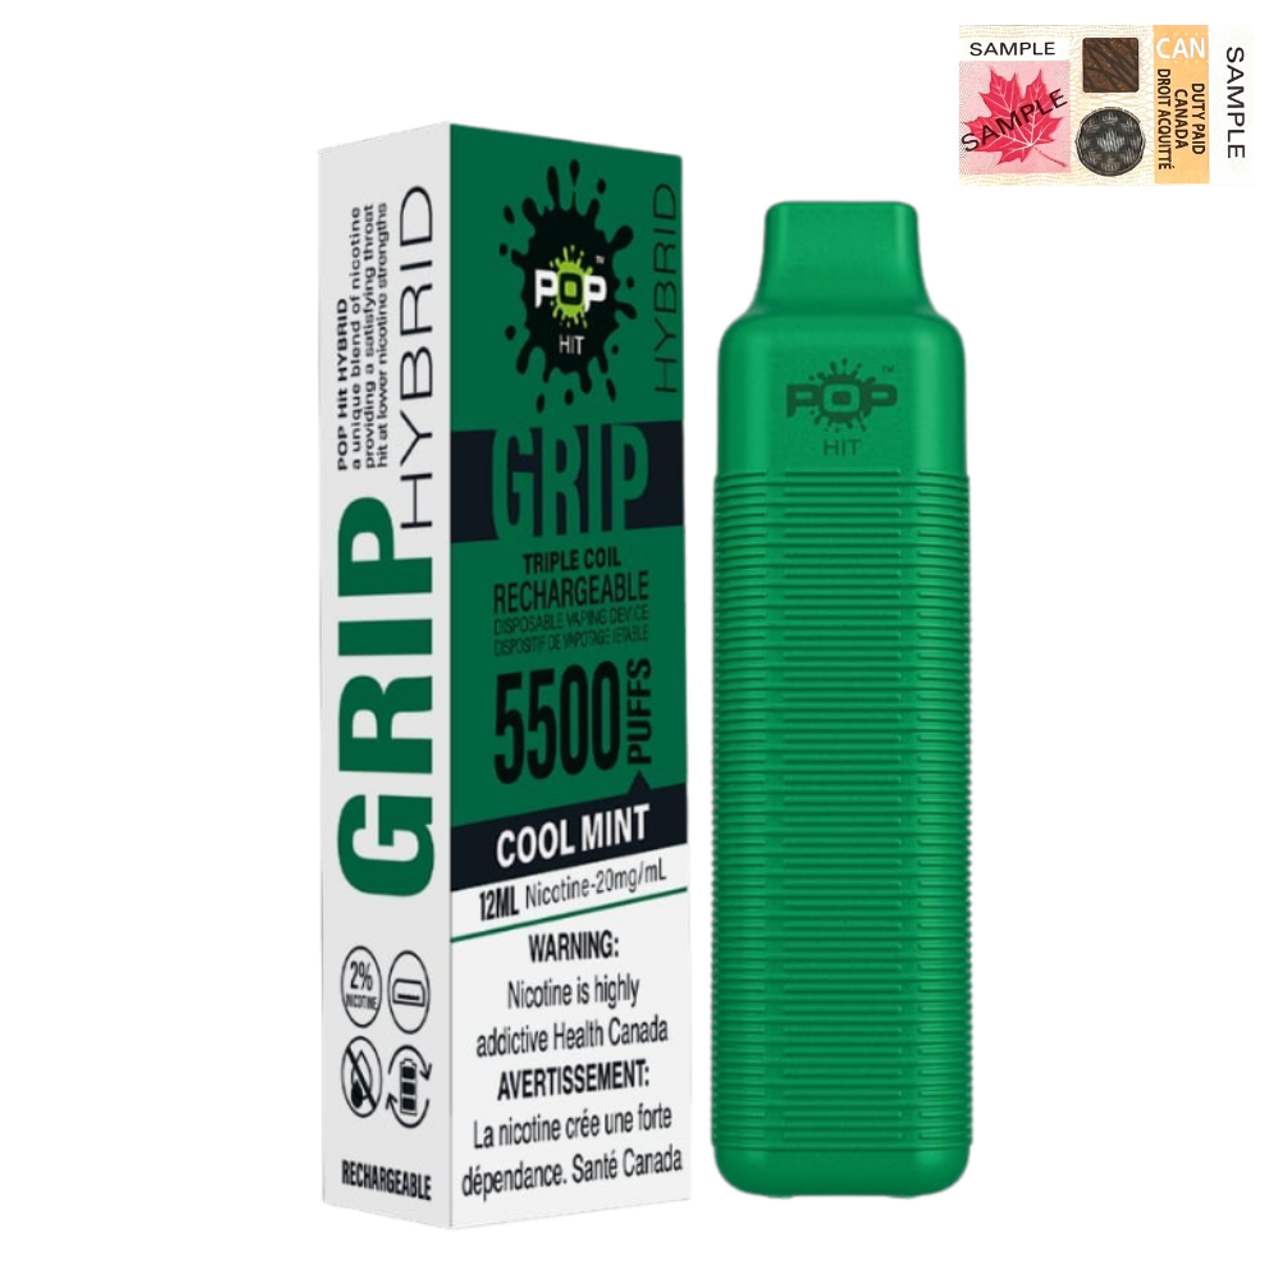 Pop Hybrid Grip 5500 - Cool Mint